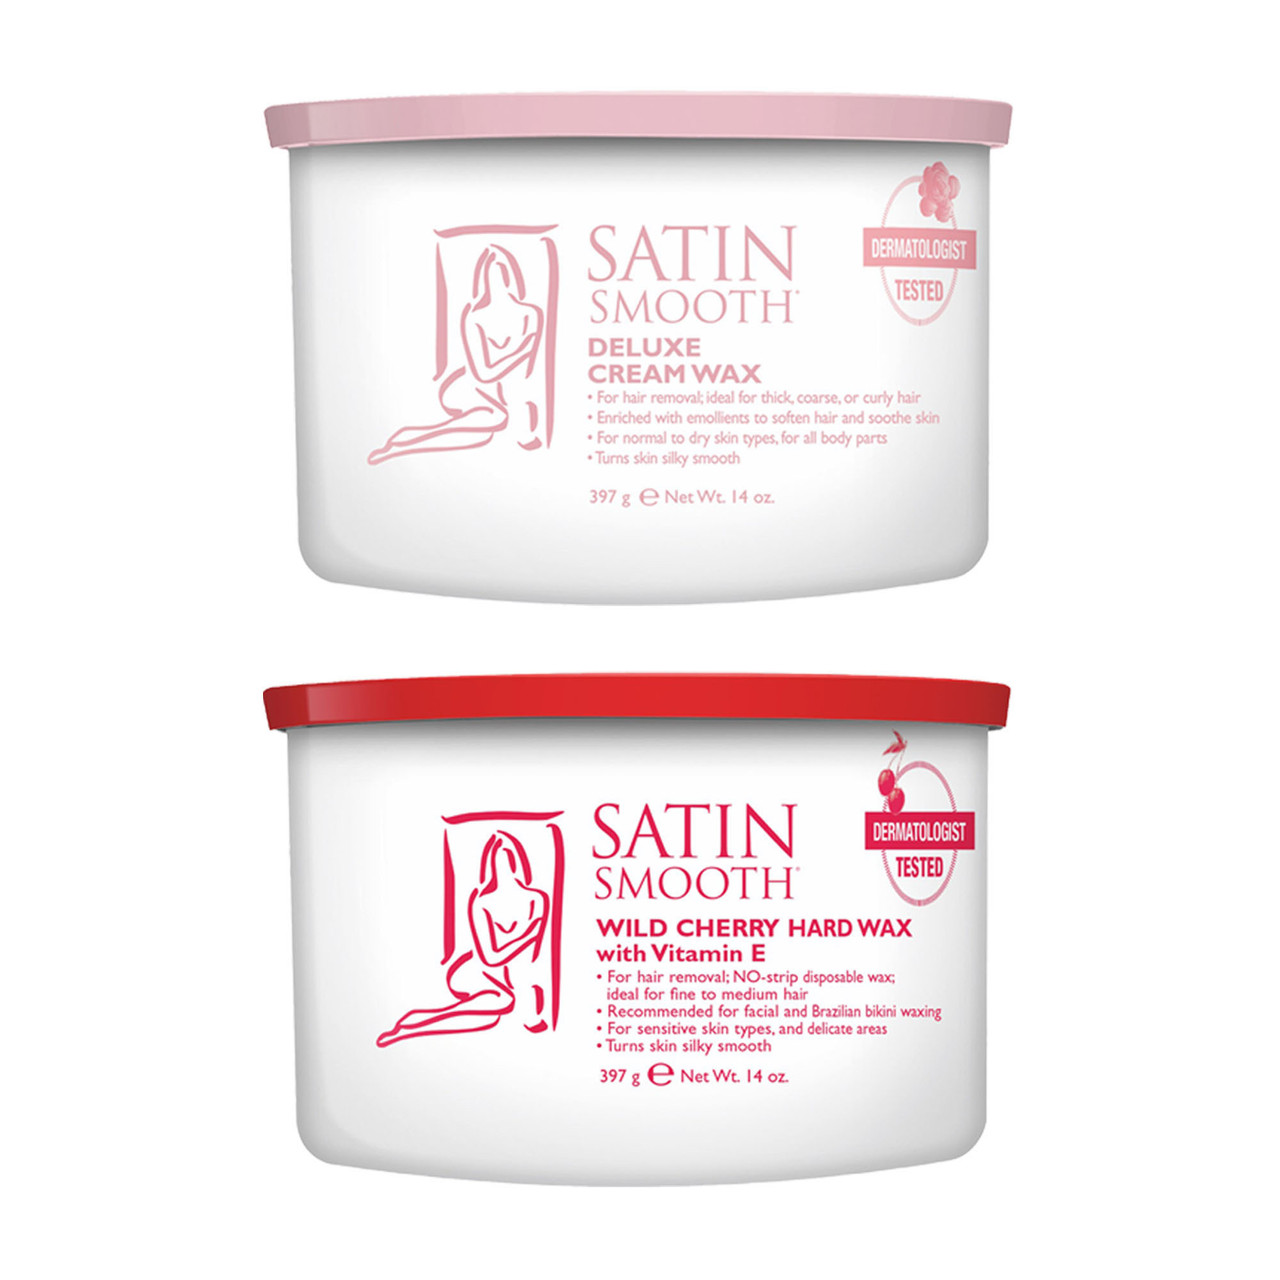 Satin Smooth Small Applicators Soft and Hard Waxes, Warmers & PRO Wax kits